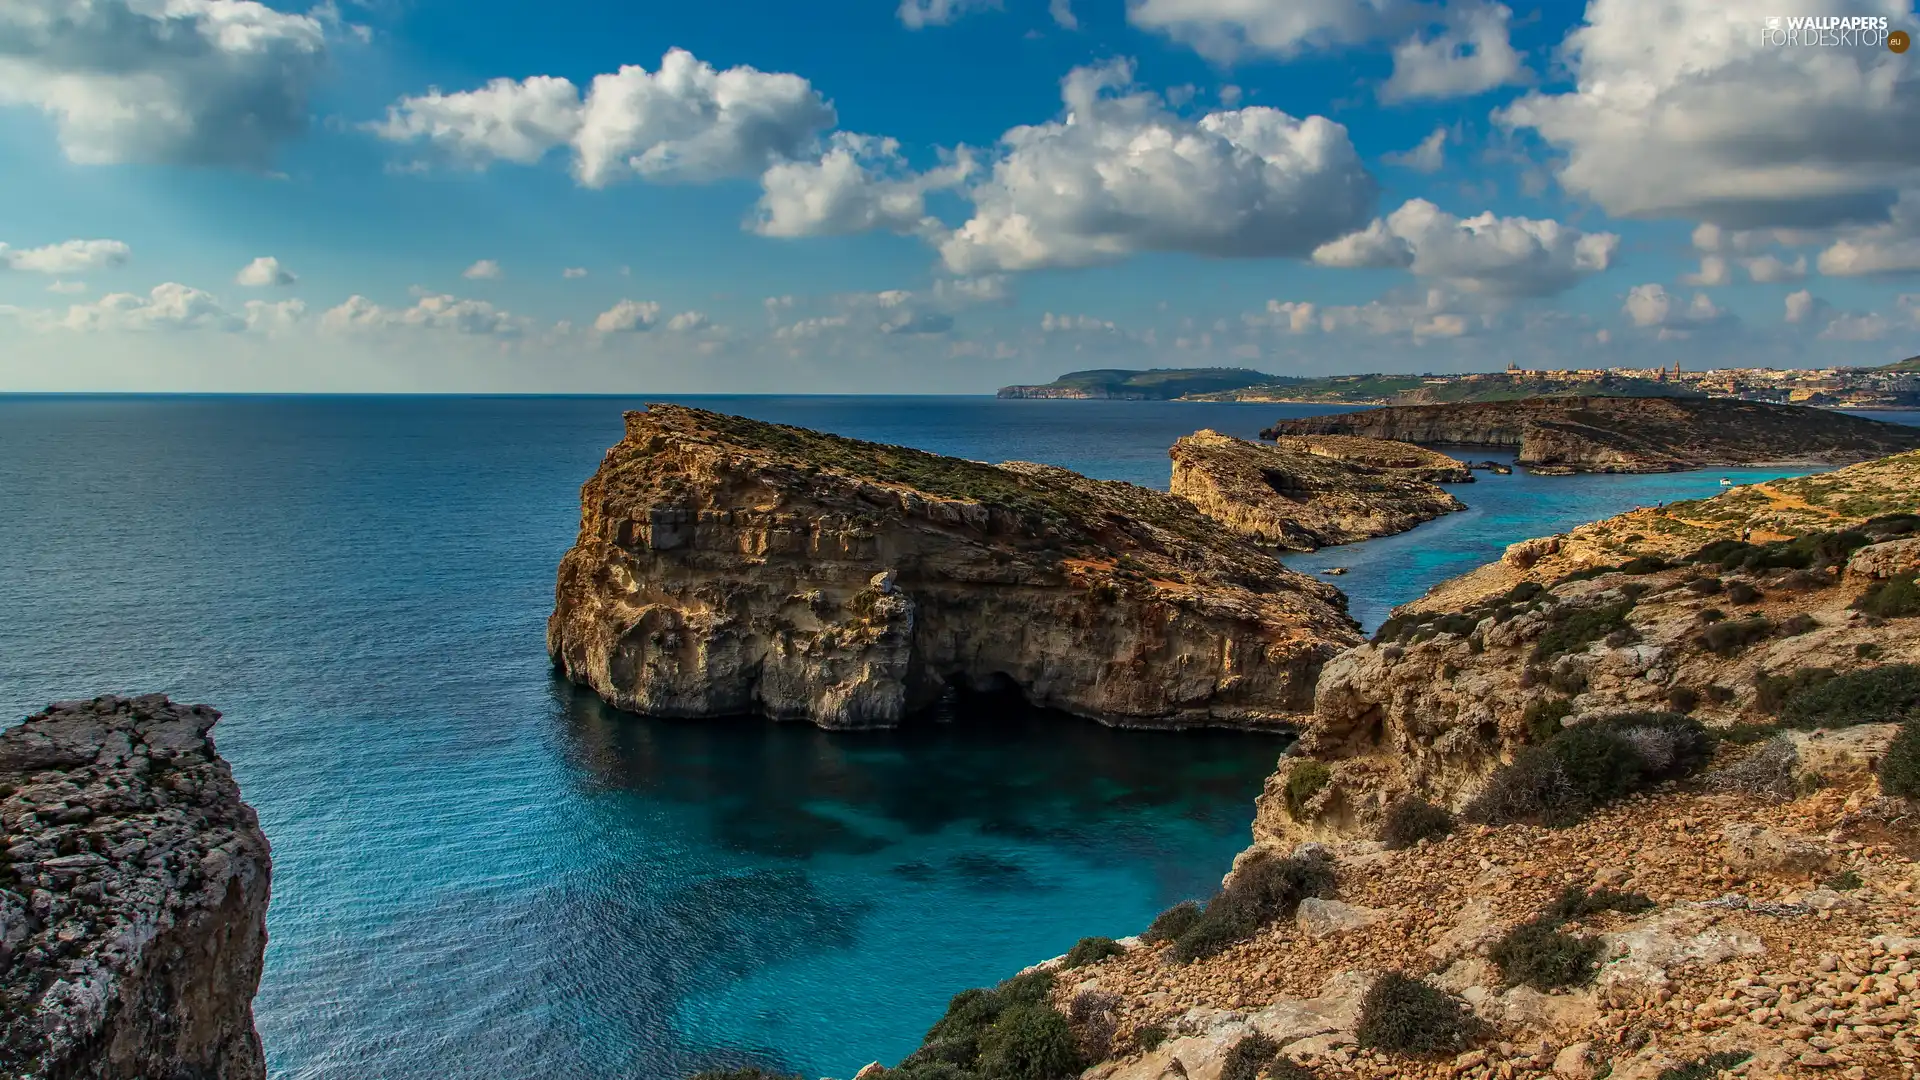 Blue Lagoon, Malta, sea, clouds, rocks